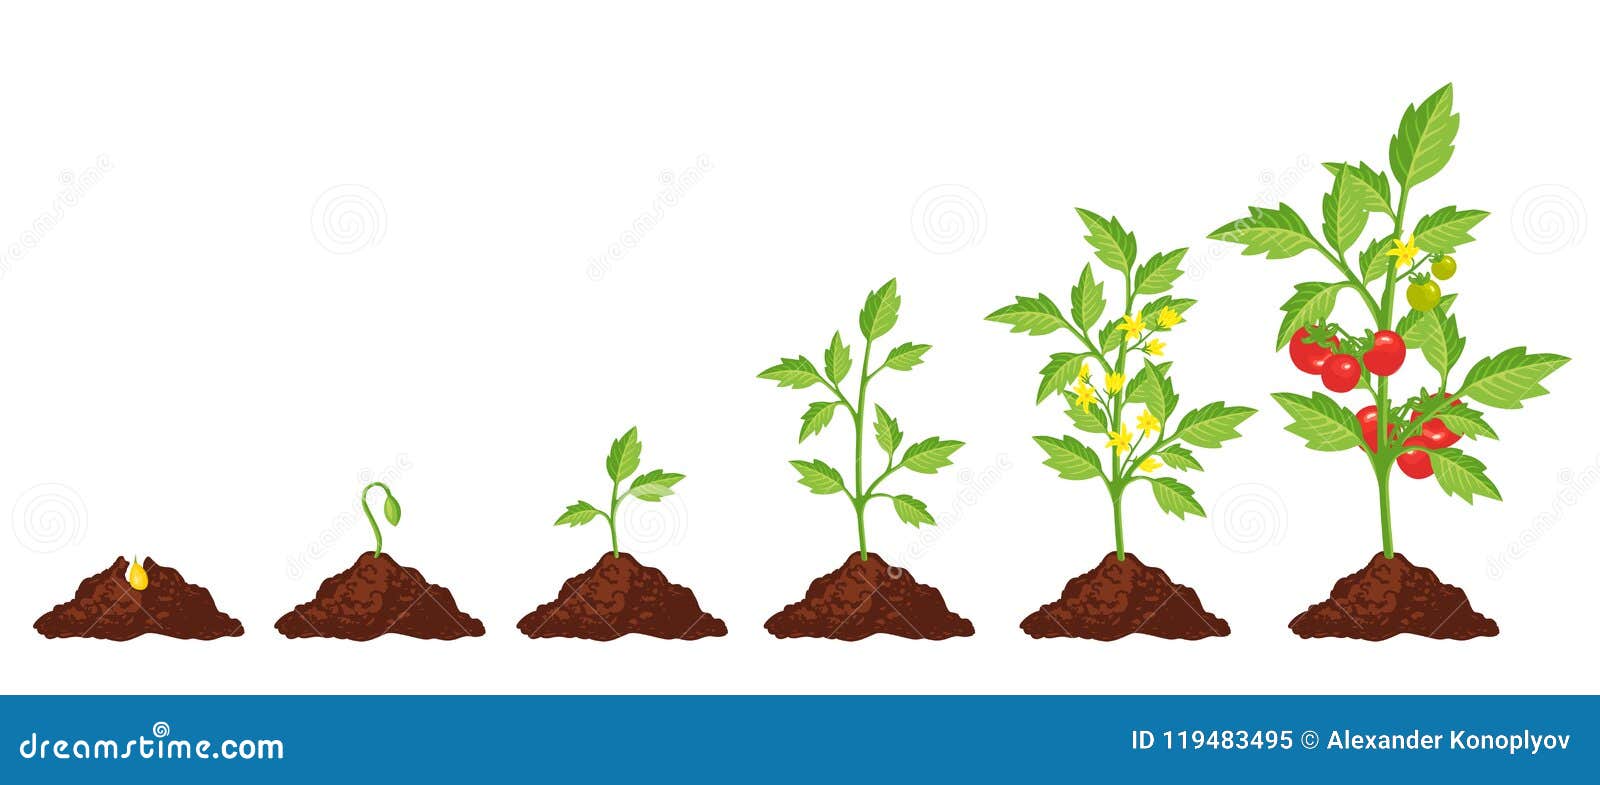 Tomato Plant Growth Cycle Vector Illustration | CartoonDealer.com #20798224